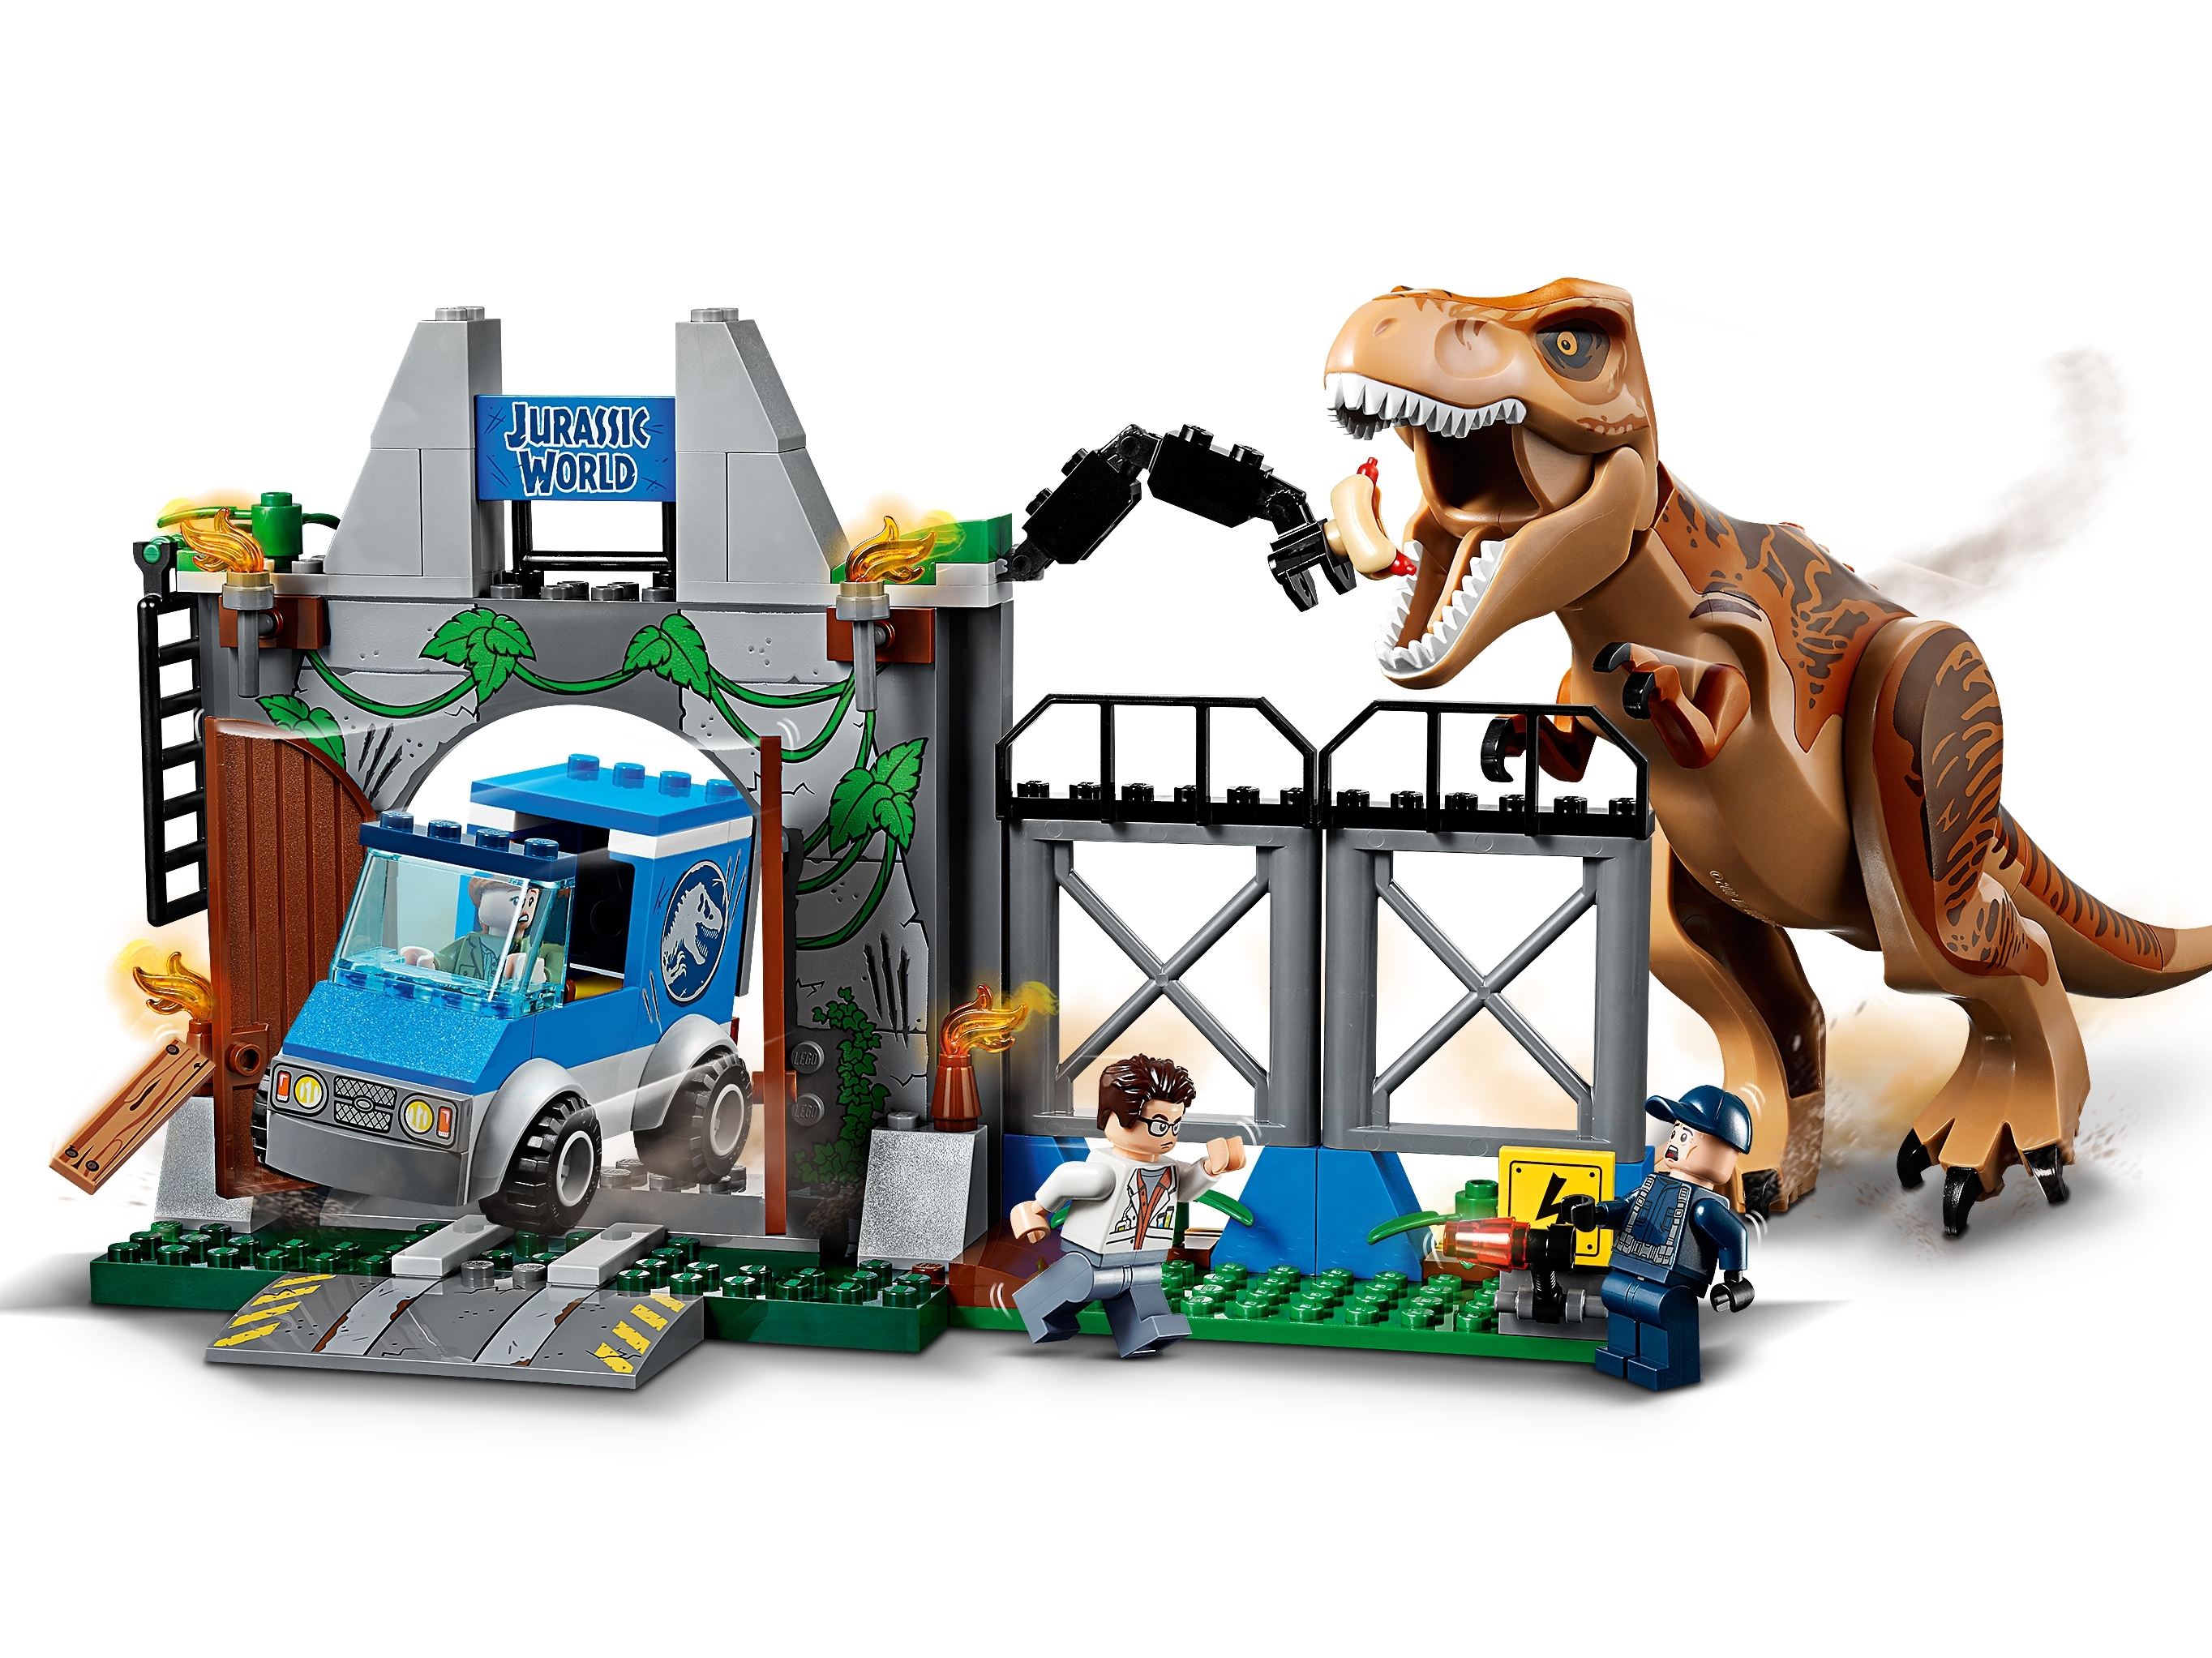 humor Snart pakke T. rex Breakout 10758 | Juniors | Buy online at the Official LEGO® Shop US